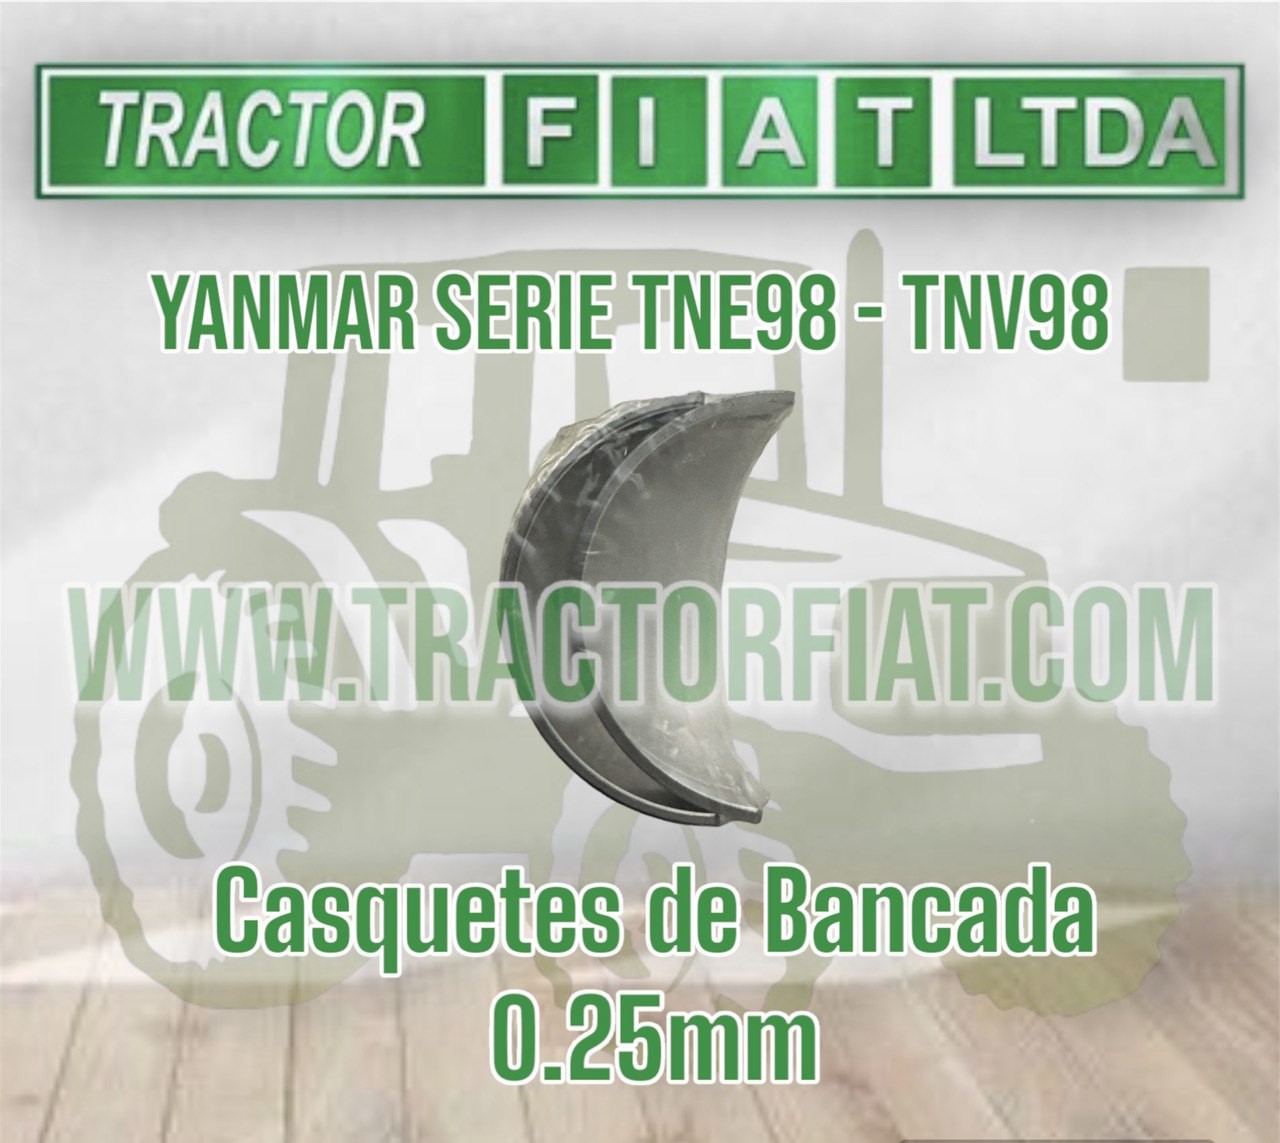 CASQUETES DE BANCADA 0.25mm -MOTOR YANMAR SERIES TNE98/TNV98